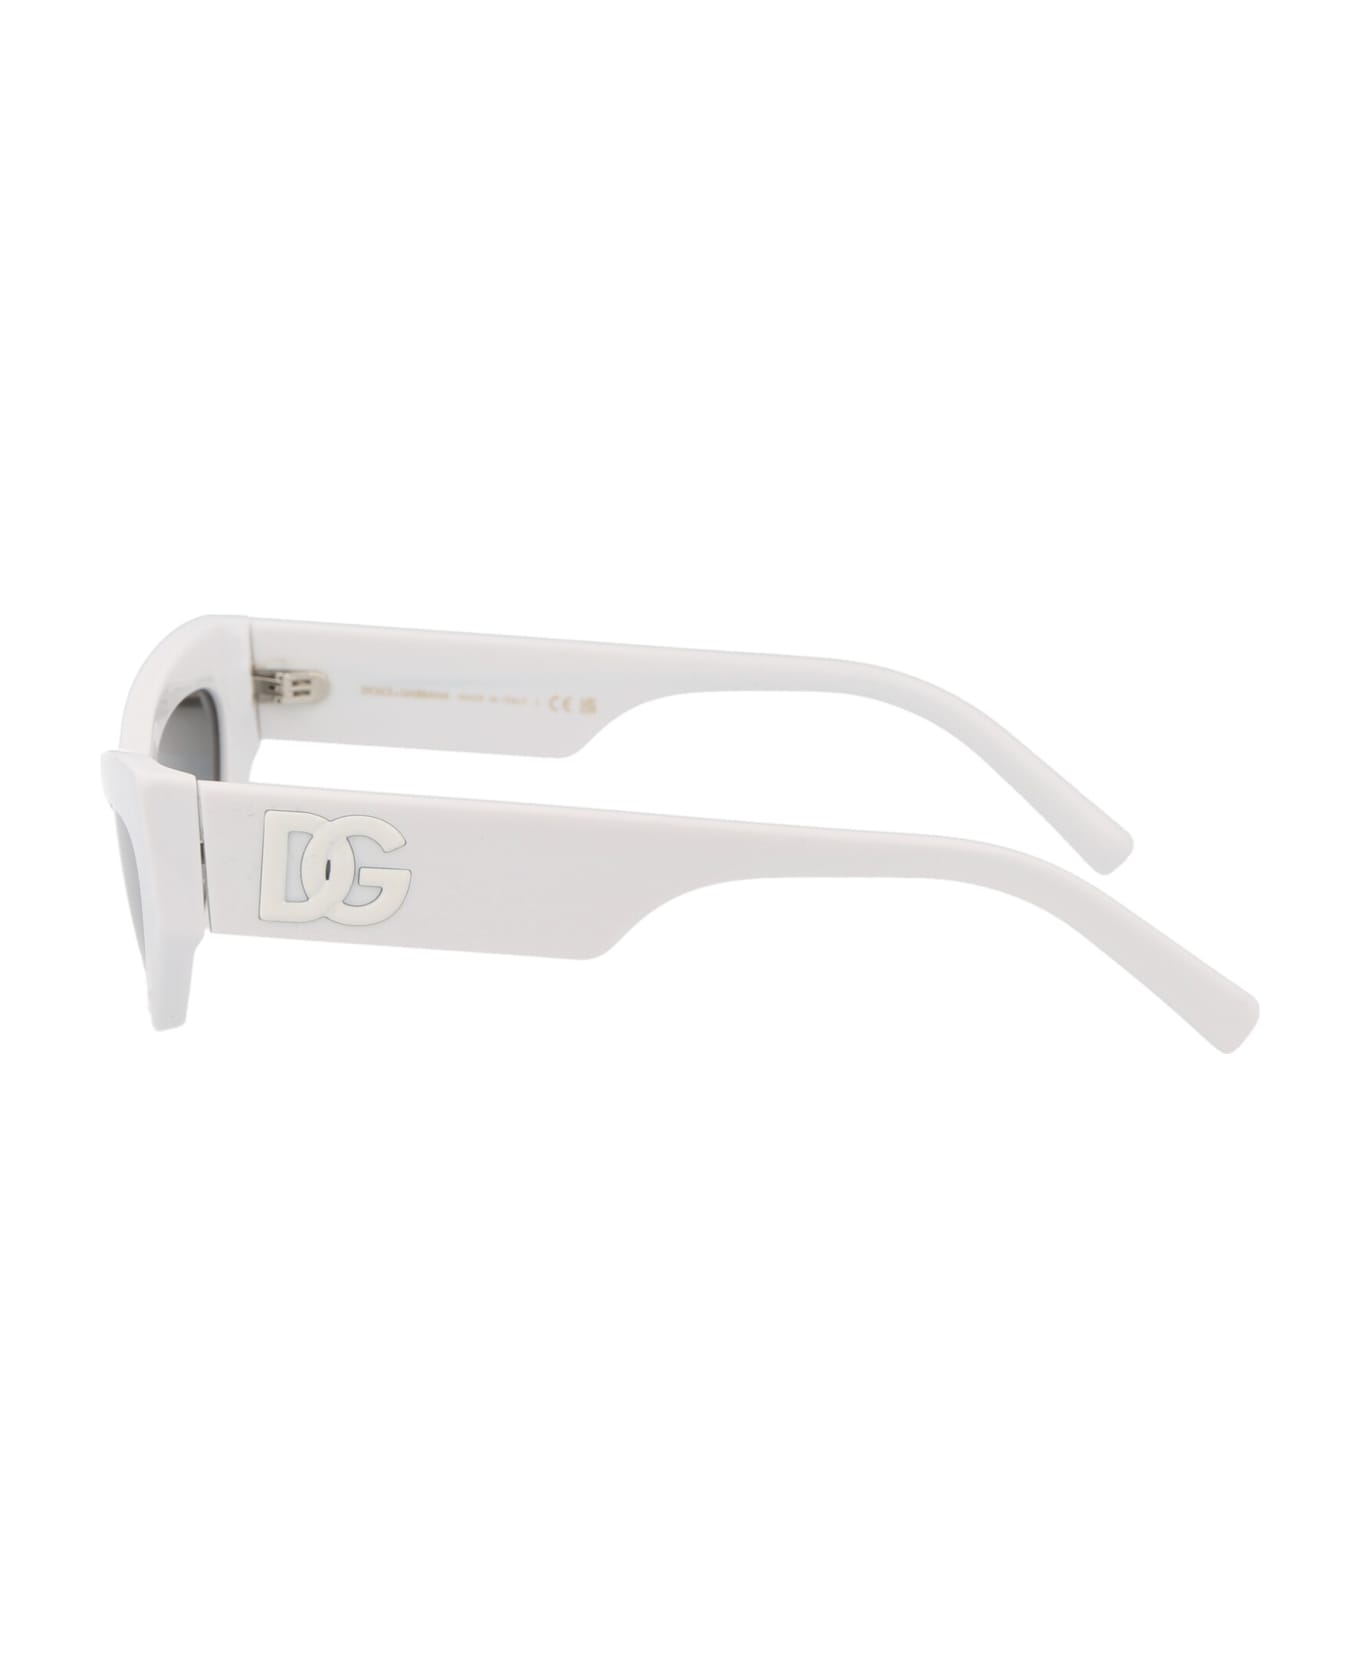 Dolce & Gabbana Eyewear 0dg4450 Sunglasses - 331287 White サングラス